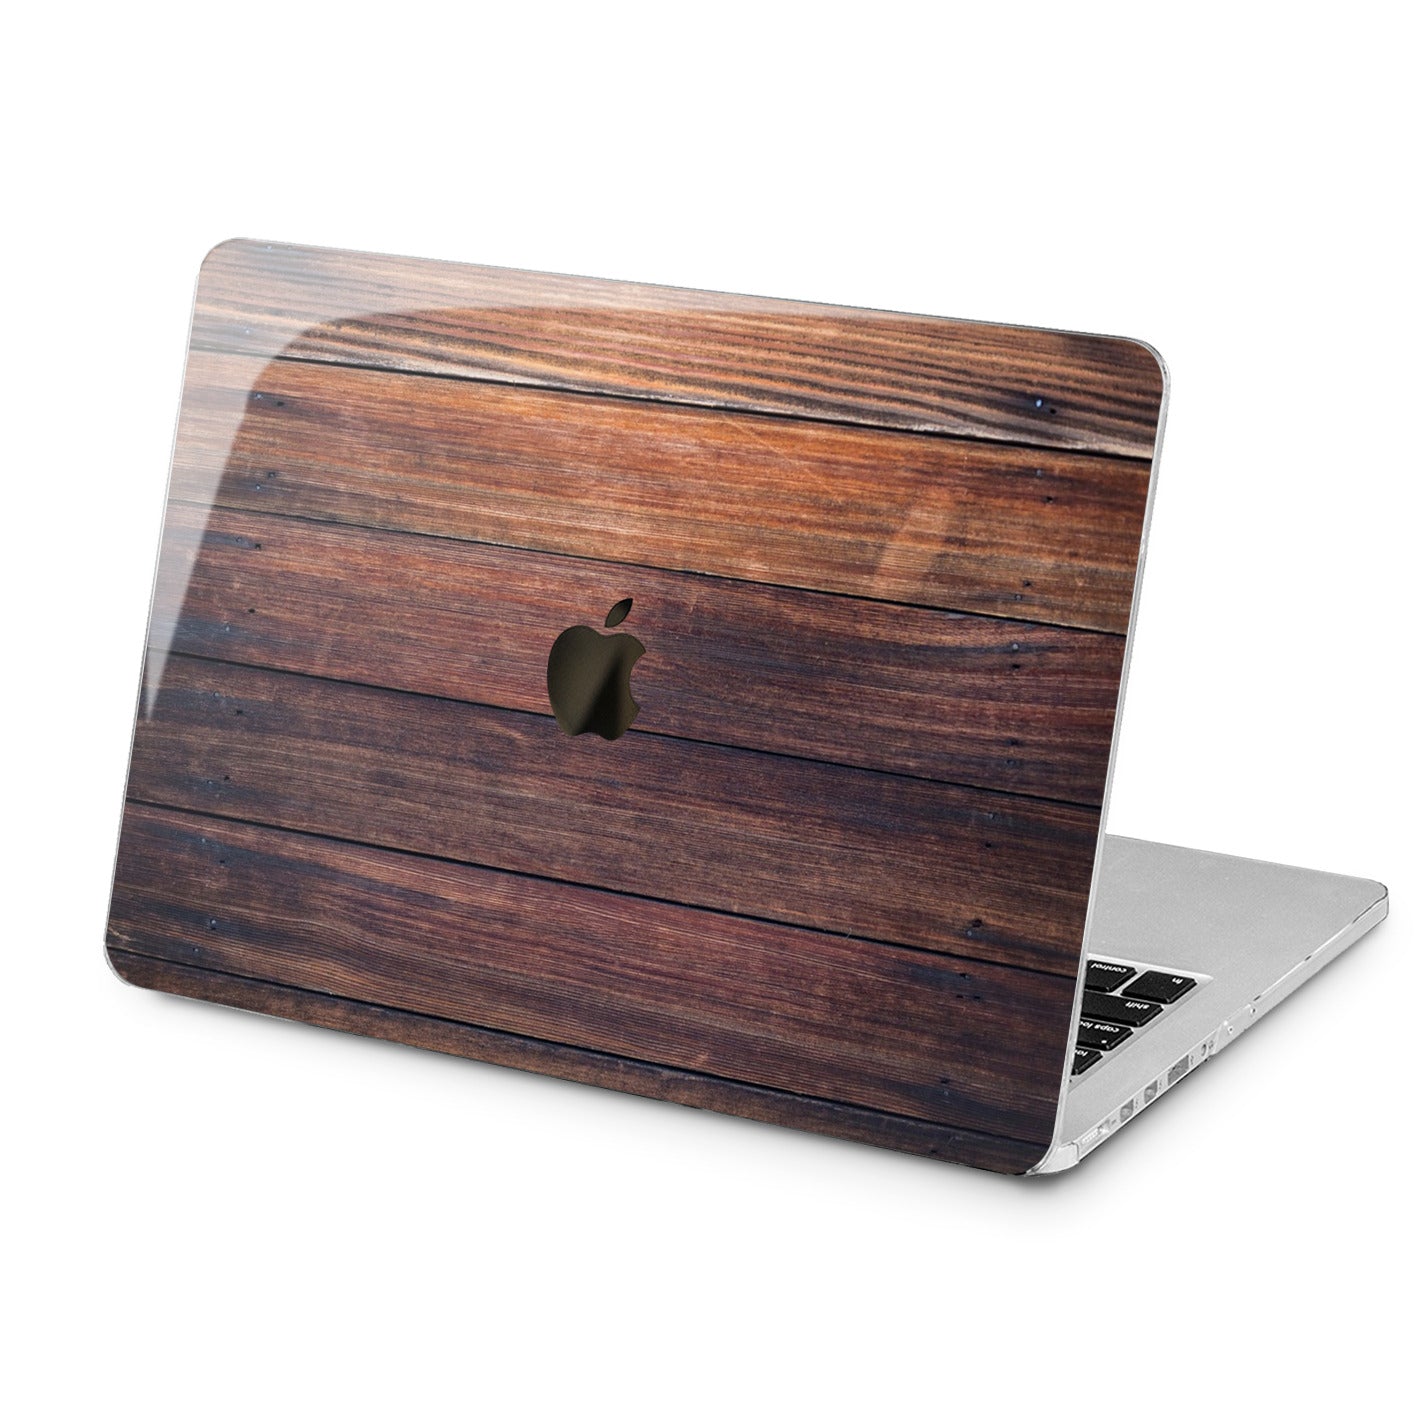 Lex Altern Lex Altern Natural Wood Case for your Laptop Apple Macbook.